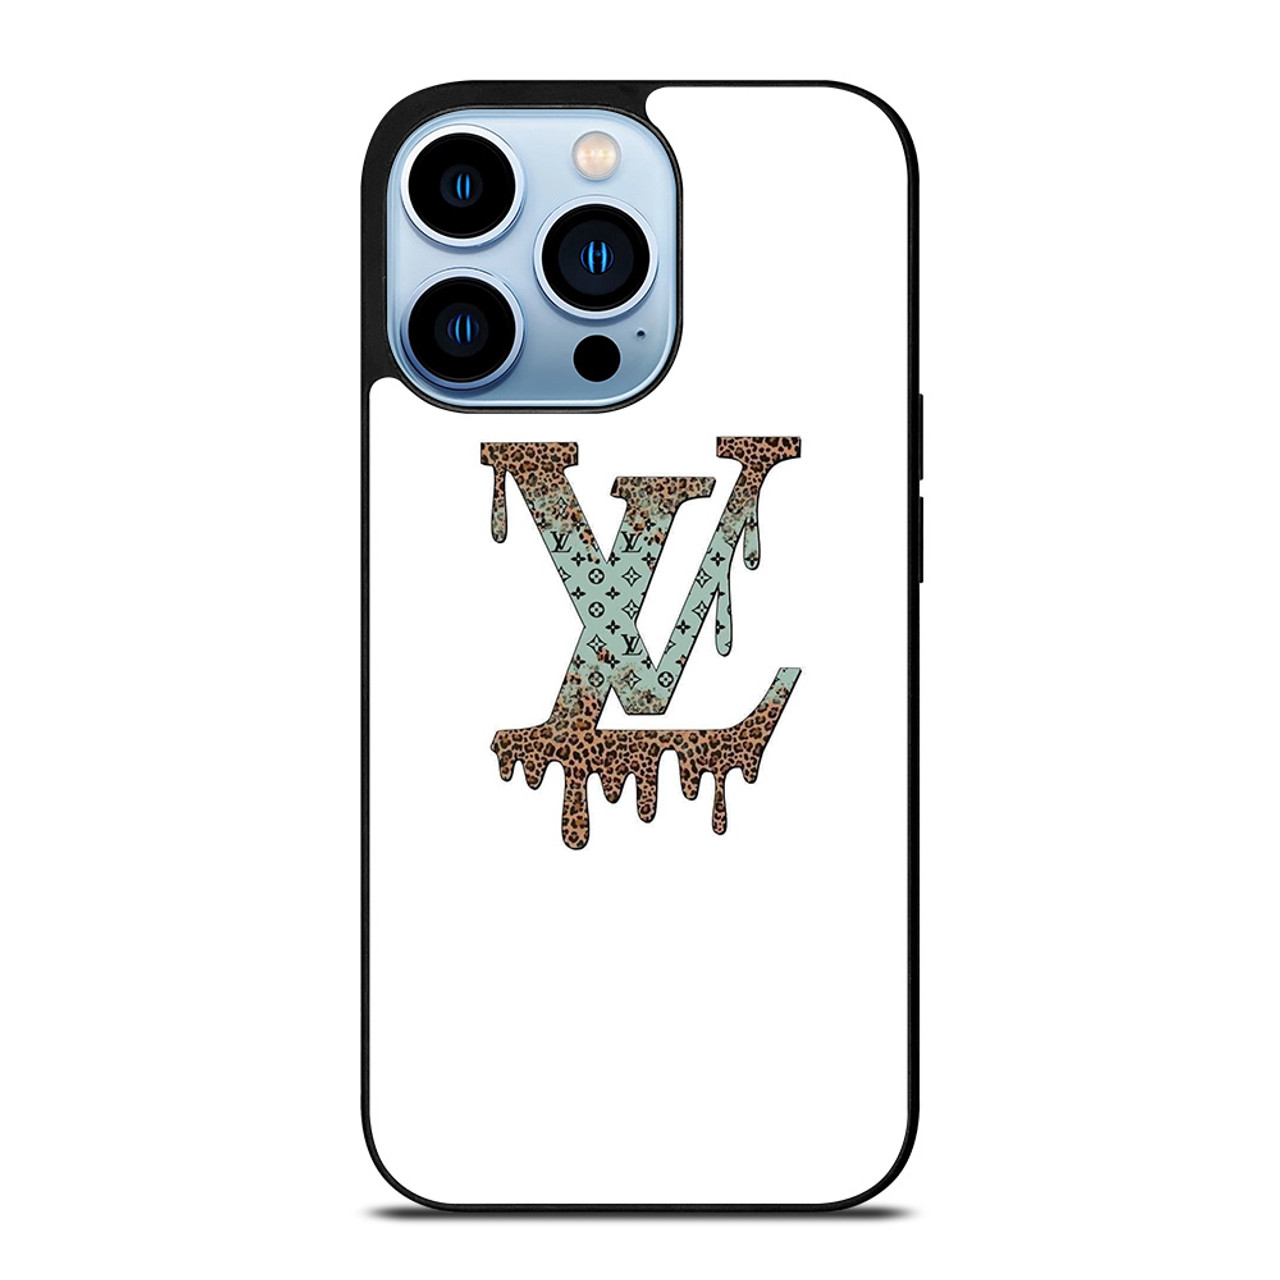 LOUIS VUITTON LV LOGO MELTING iPhone 13 Pro Case Cover